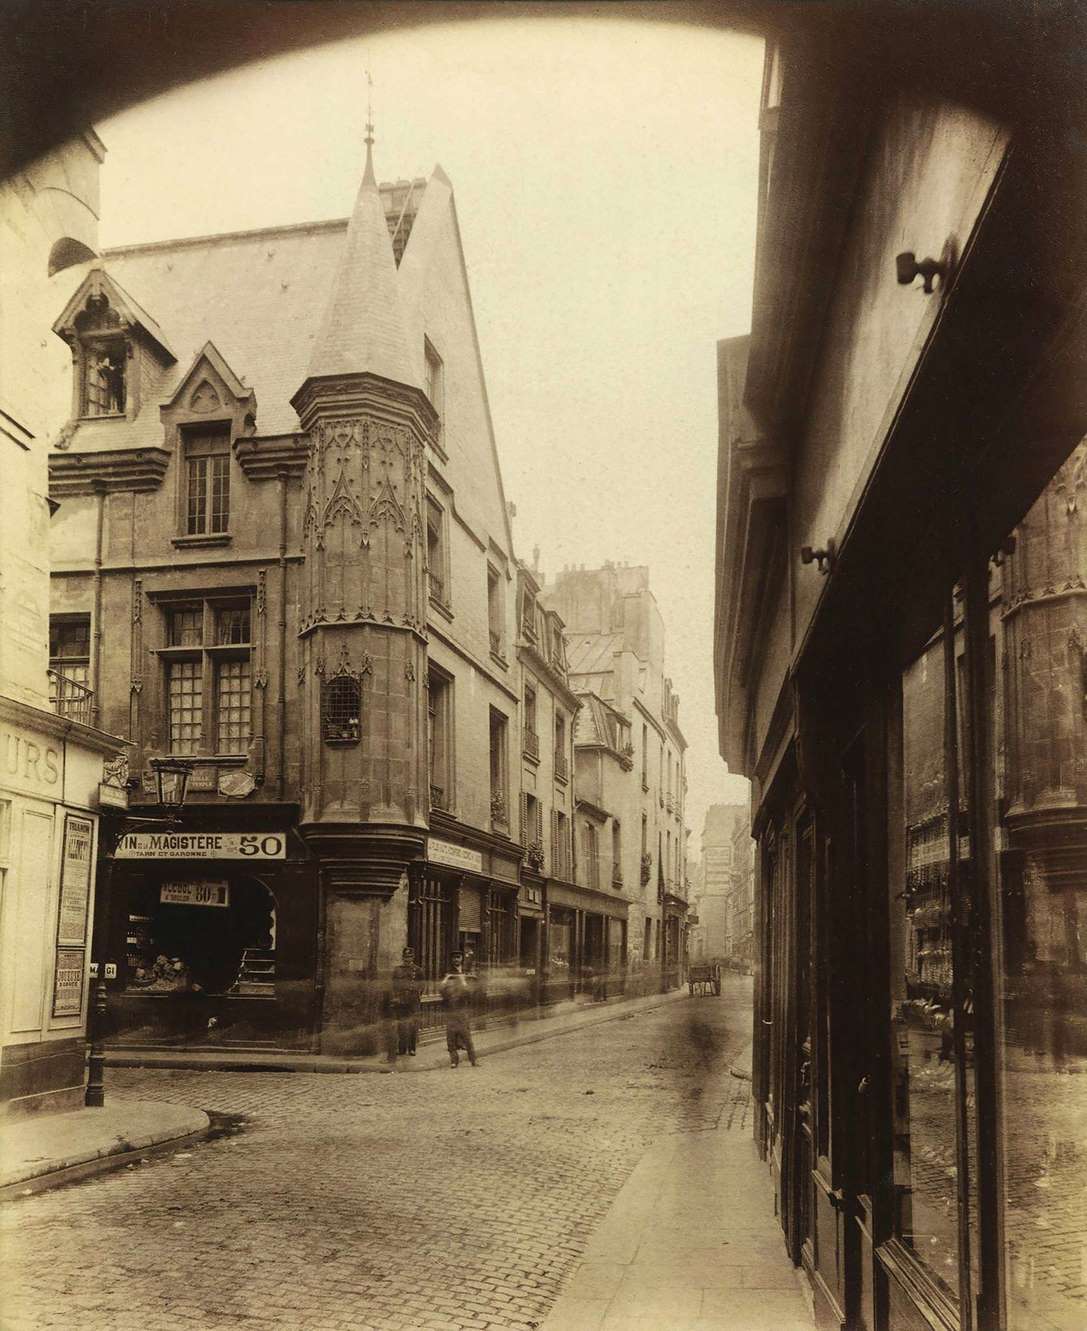 Hotel Simon Herouet (known as Barbette), rue des Francs Bourgeois in Paris, 1898.